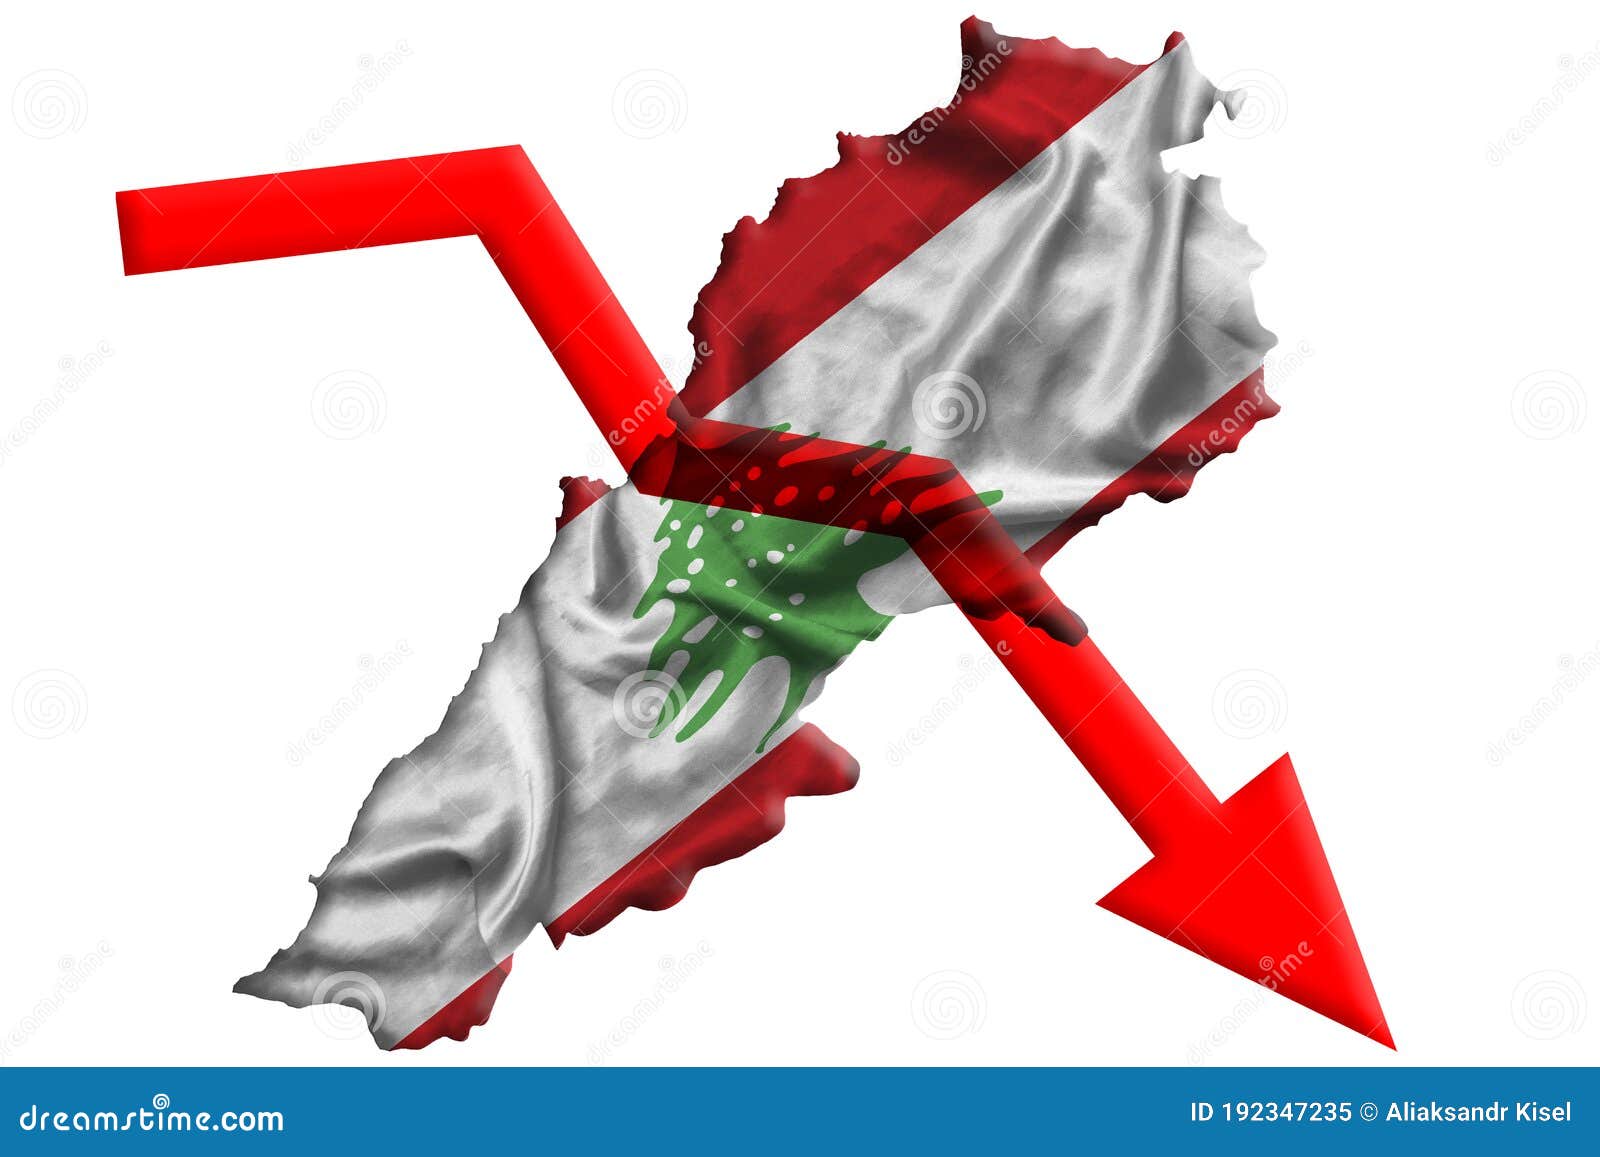 Lebanon crisis